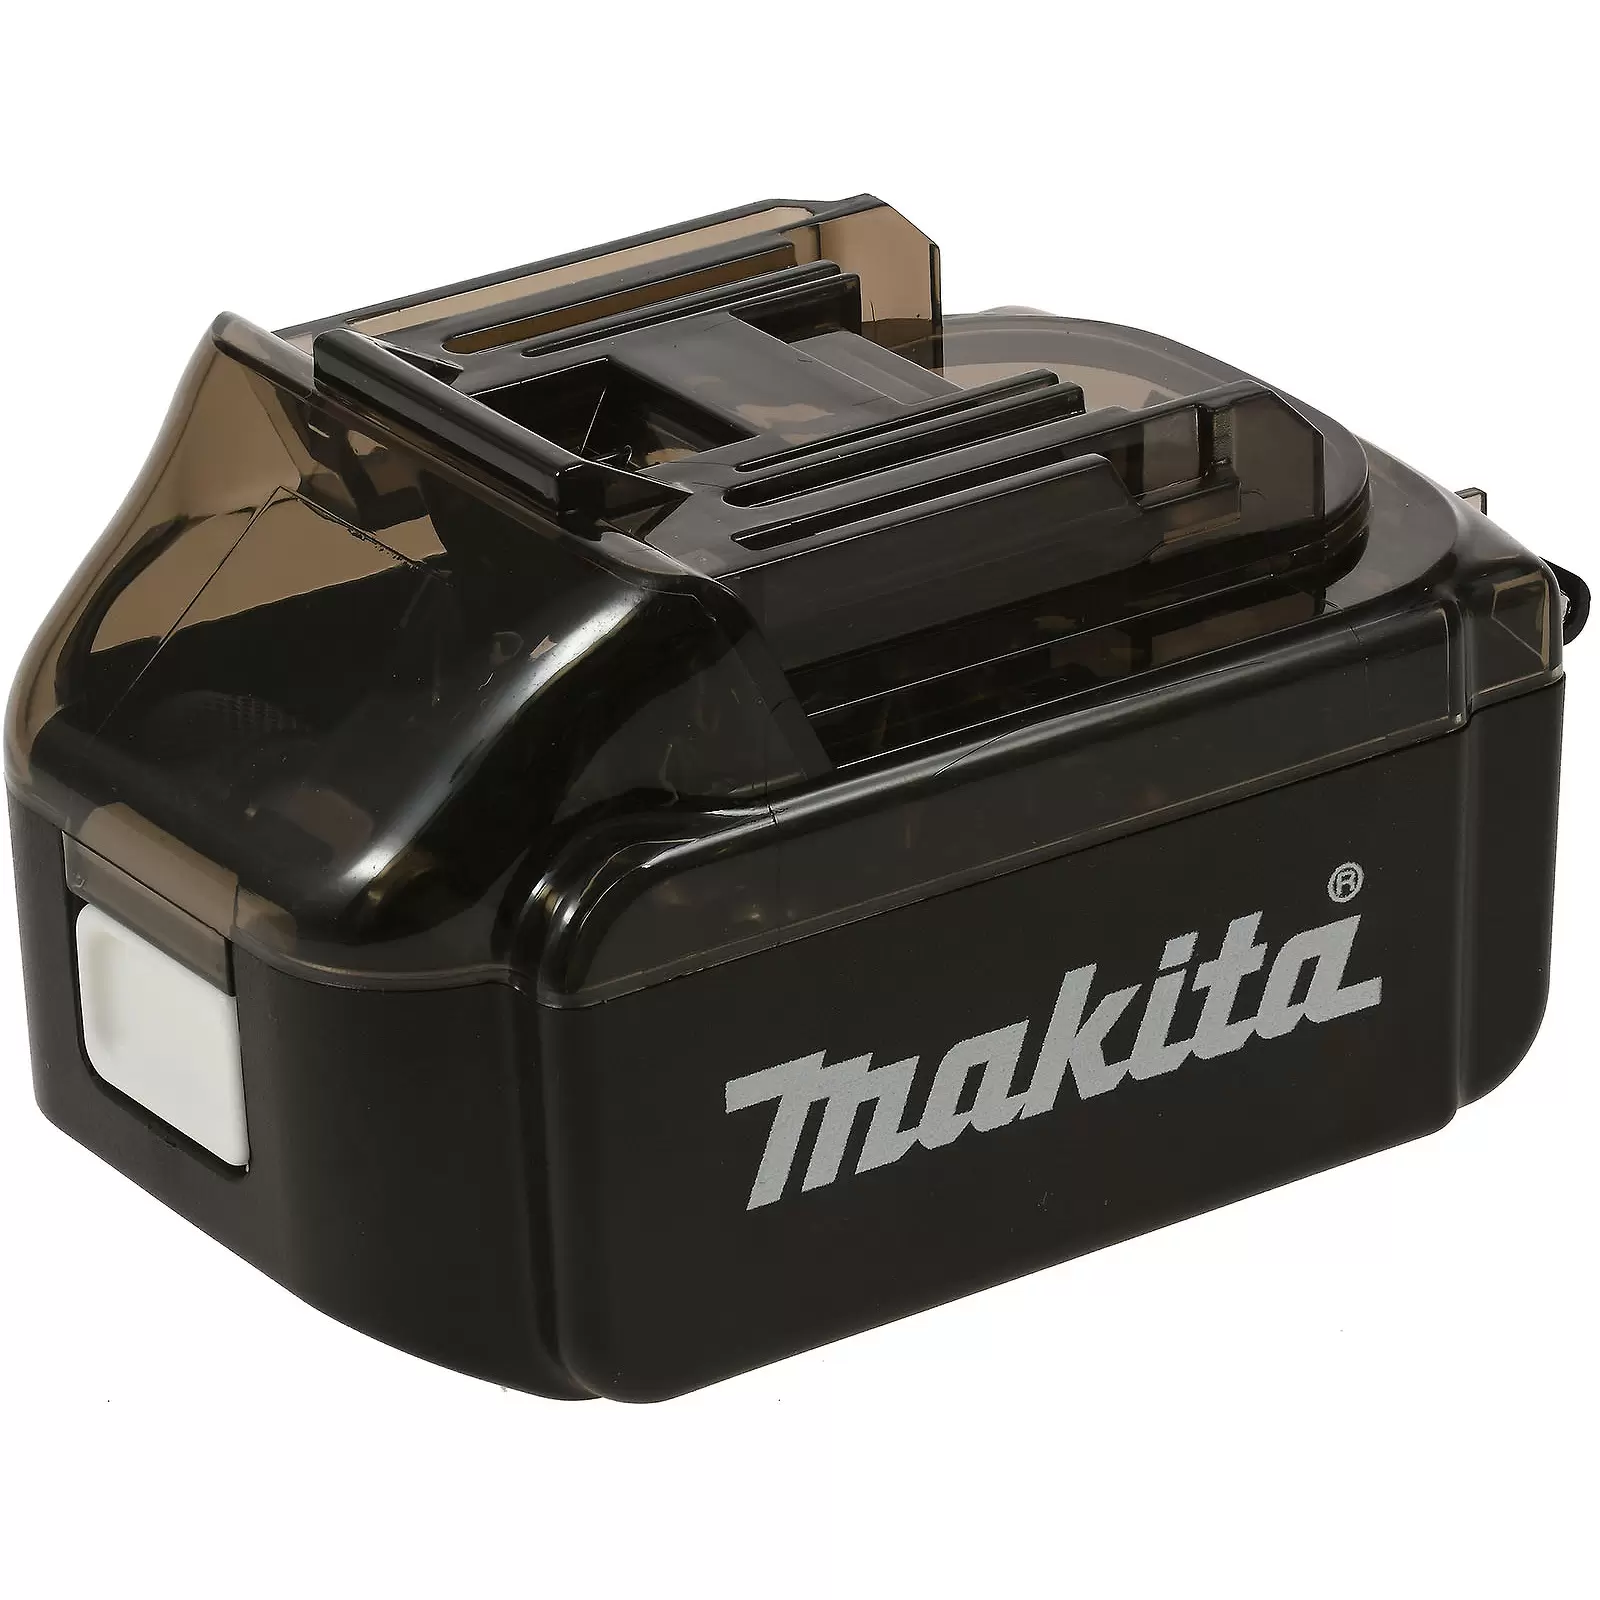 Makita Bit-Box, Schrauber-Bit-Set E-00022 inkl. Bit-Halter 1/4" im Akku-Design